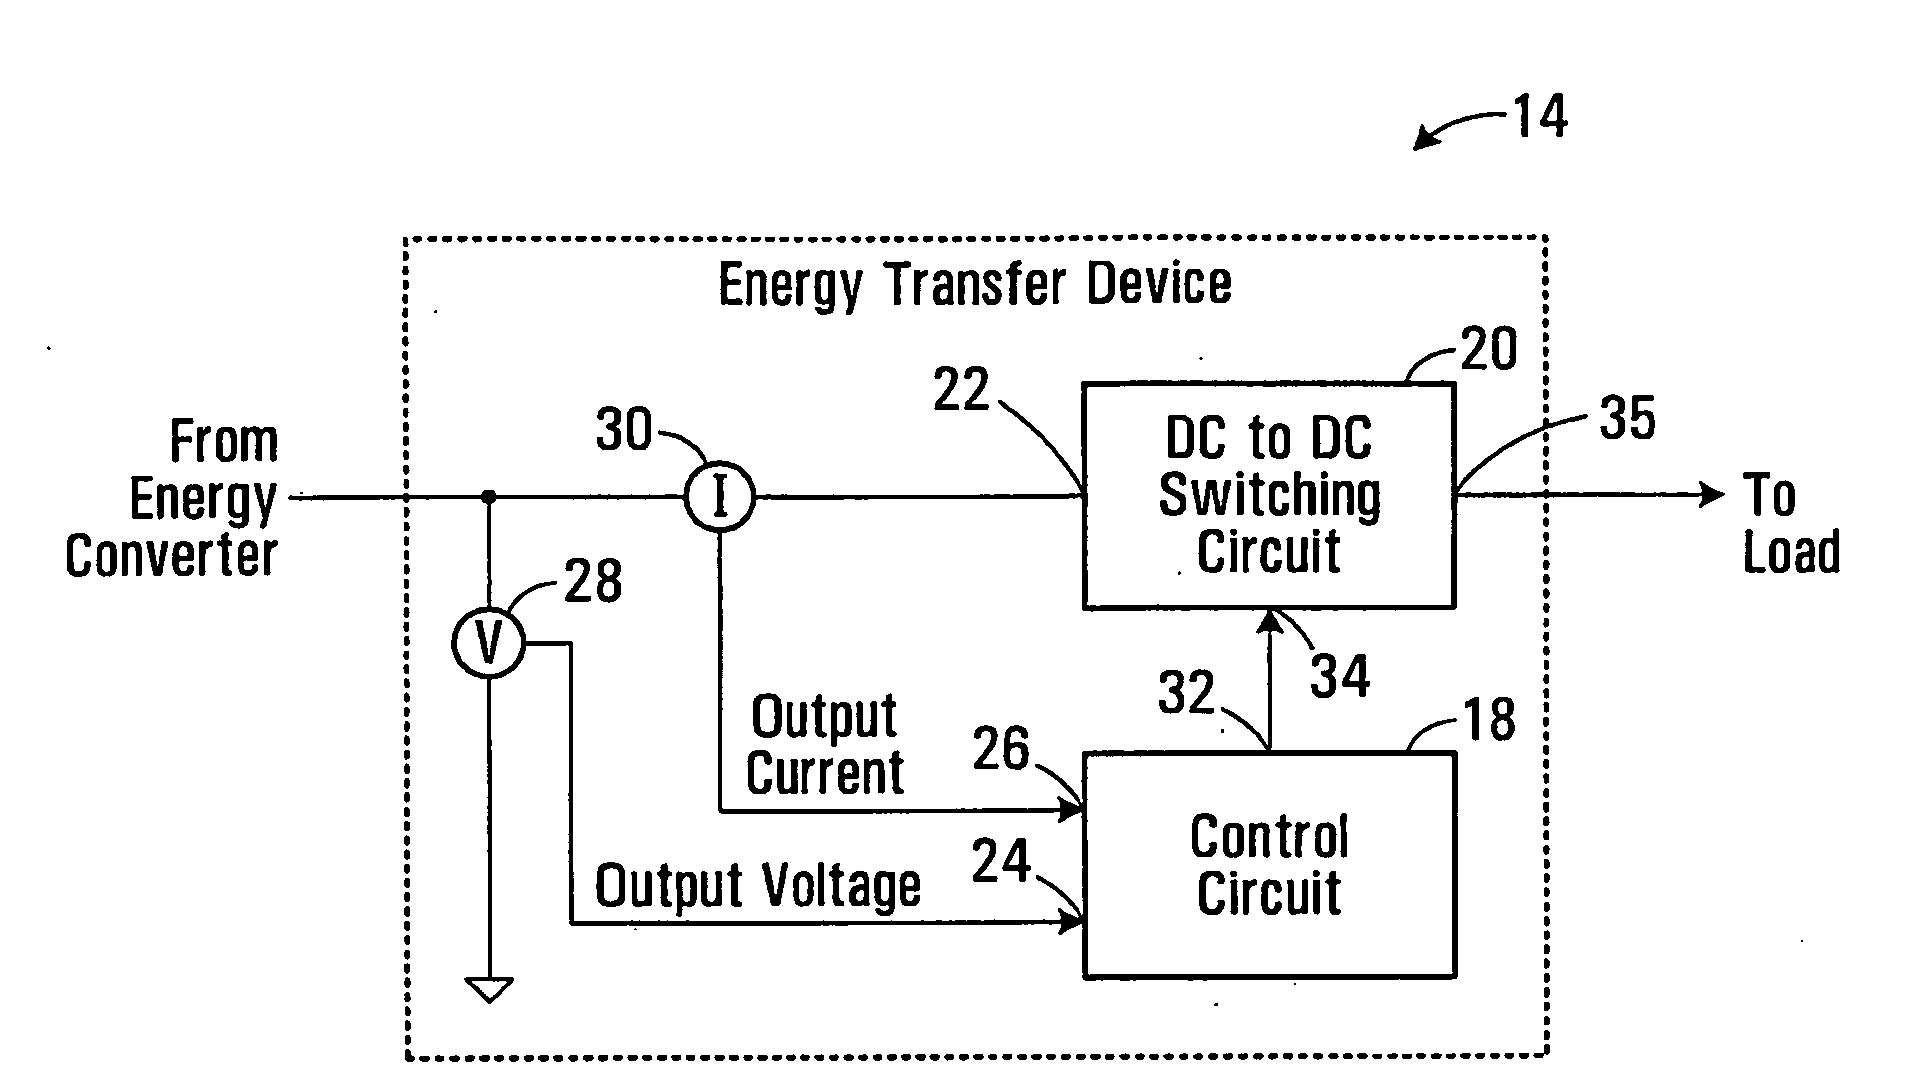 Perturb voltage as a decreasing non-linear function of converter power